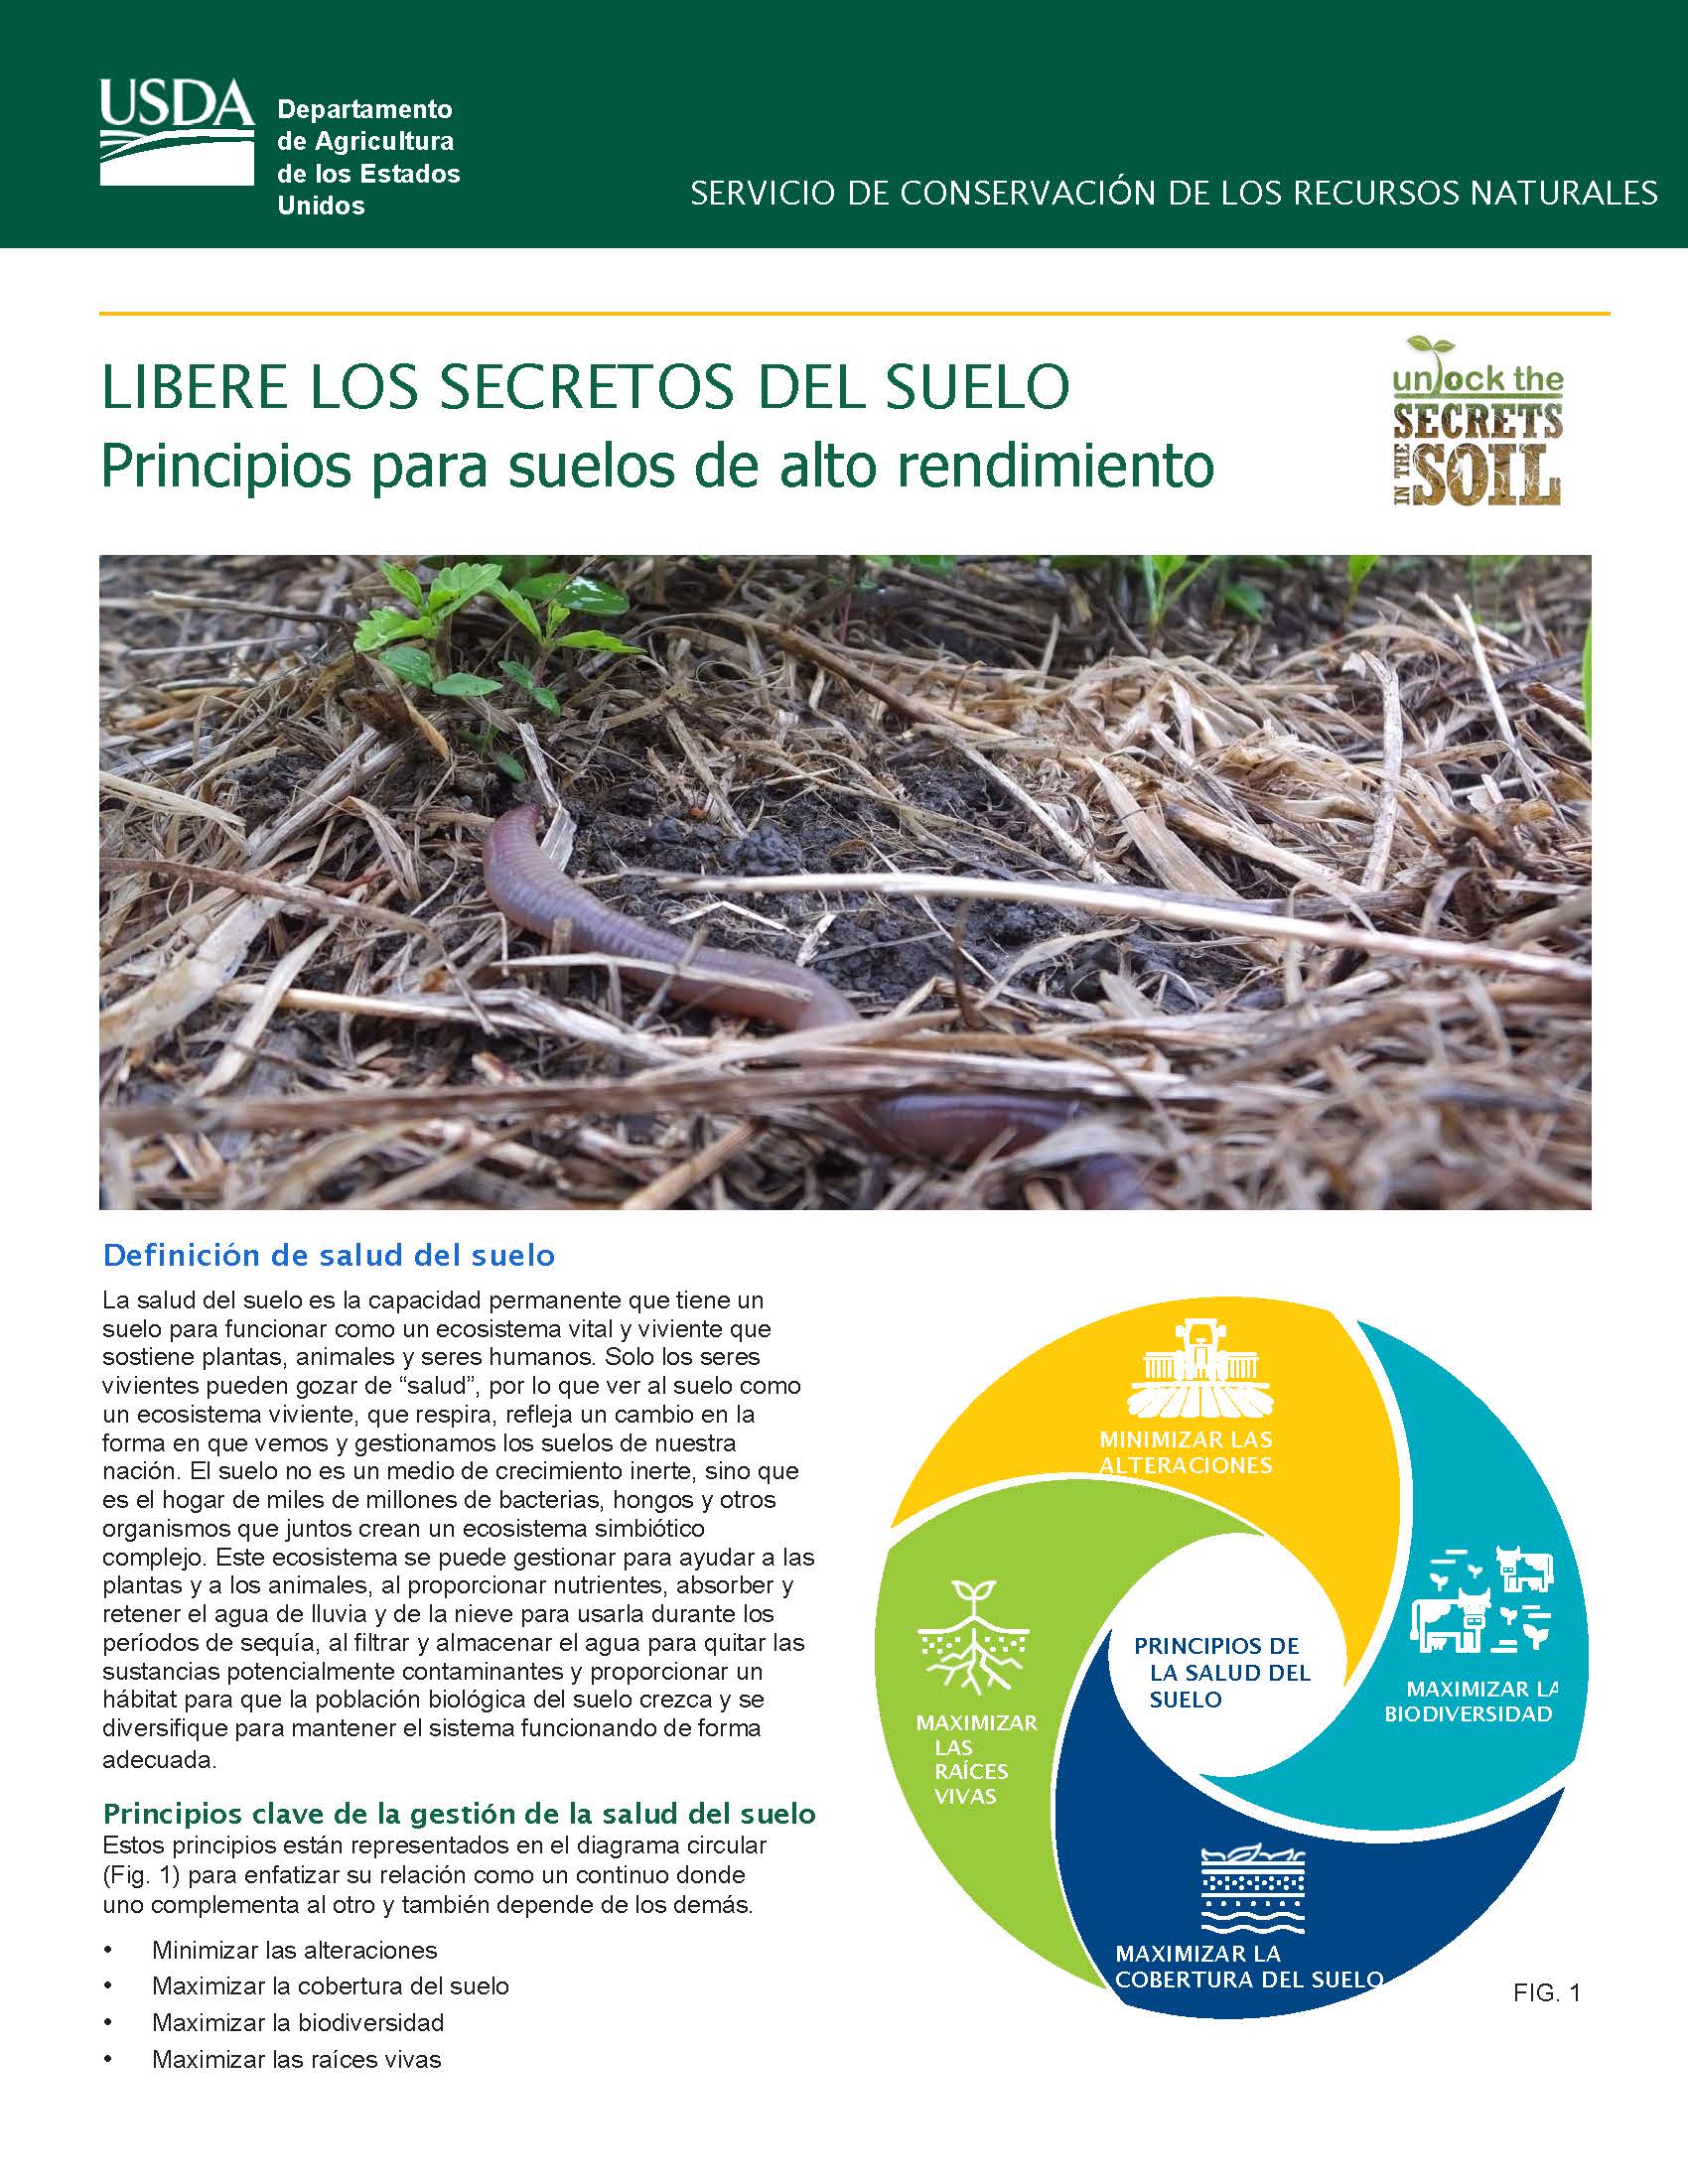 Spanish Soil Health Principles for High Functioning Soils fact sheet